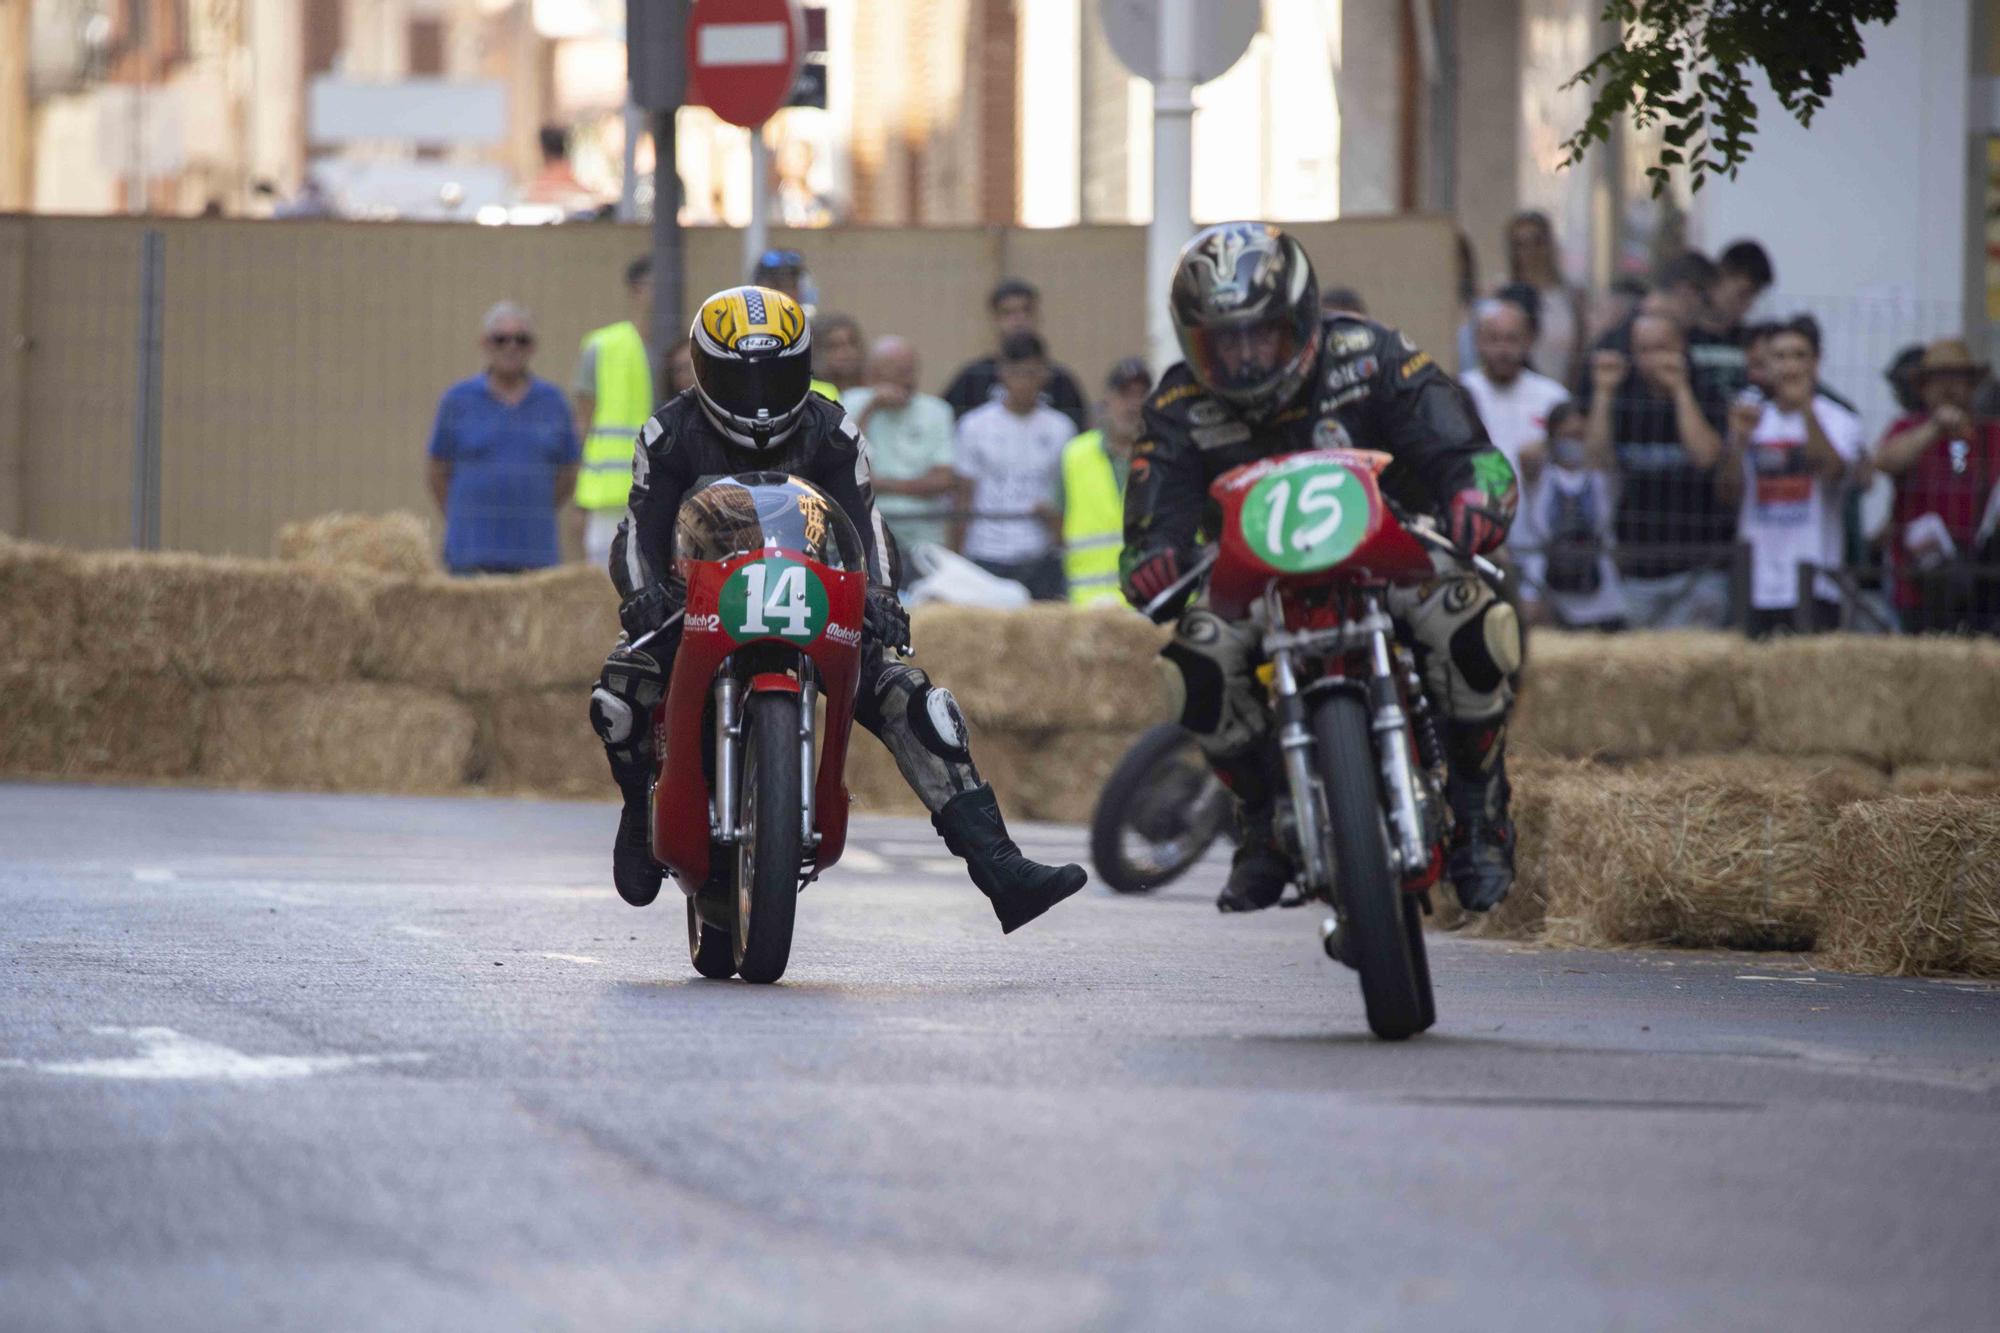 La carrera urbana de motos más antigua de España bate récords en Xàtiva